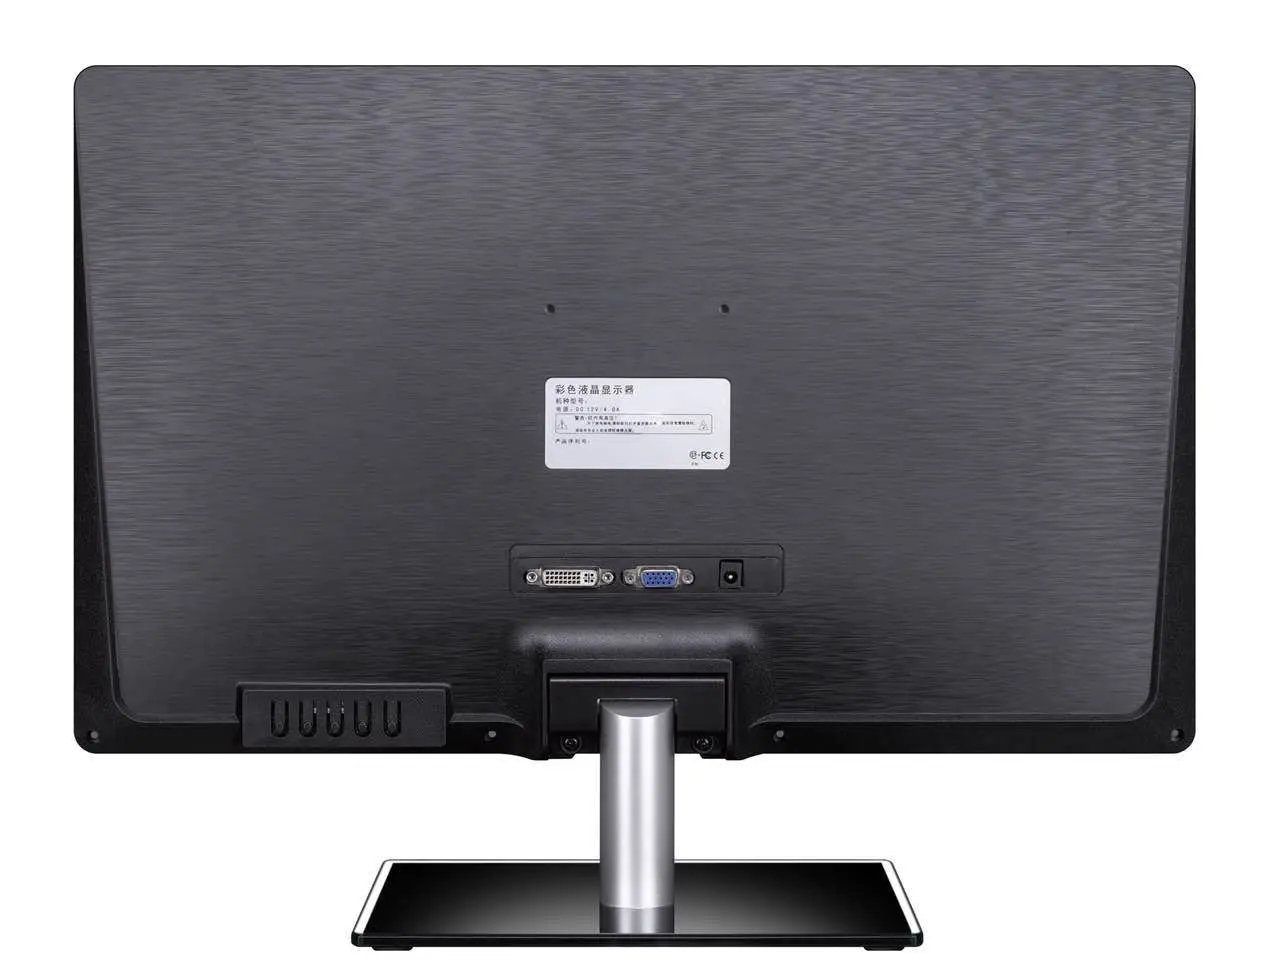 Xinyao LCD 27 27 inch full hd monitor customization for lcd screen